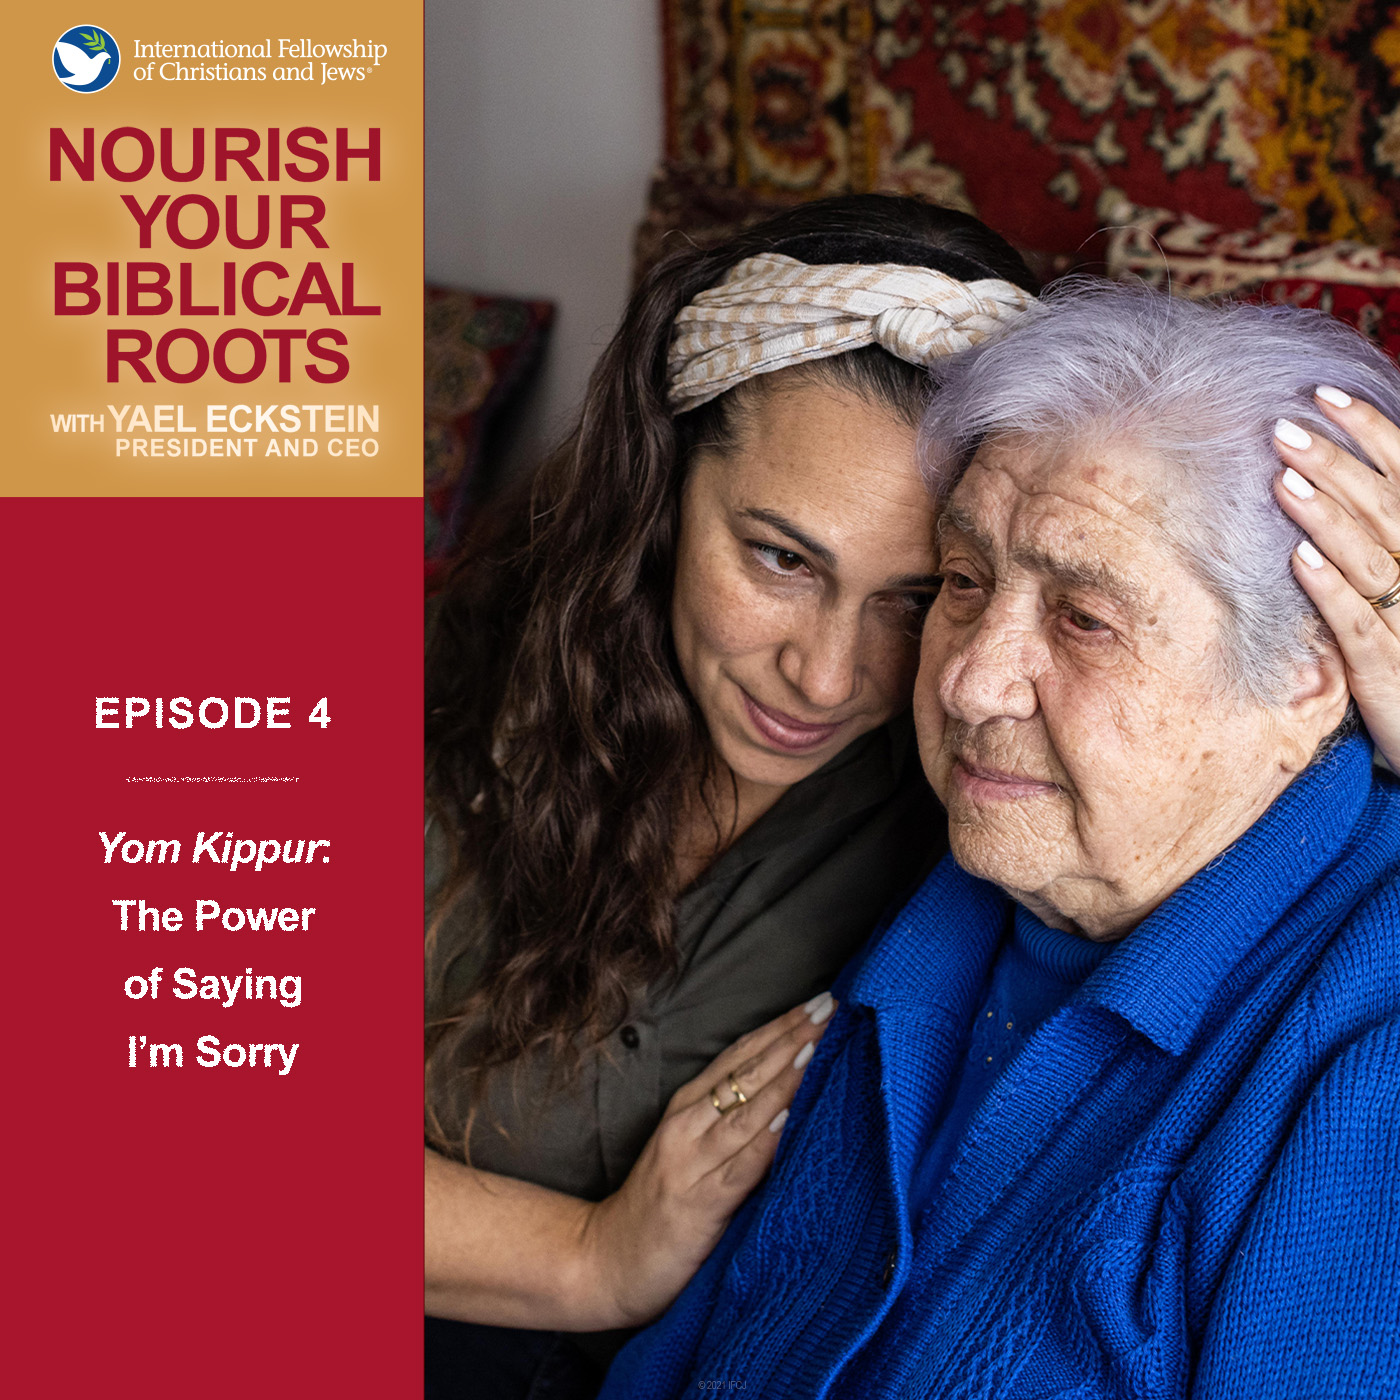 Yom Kippur: The Power of Saying “I’m Sorry”